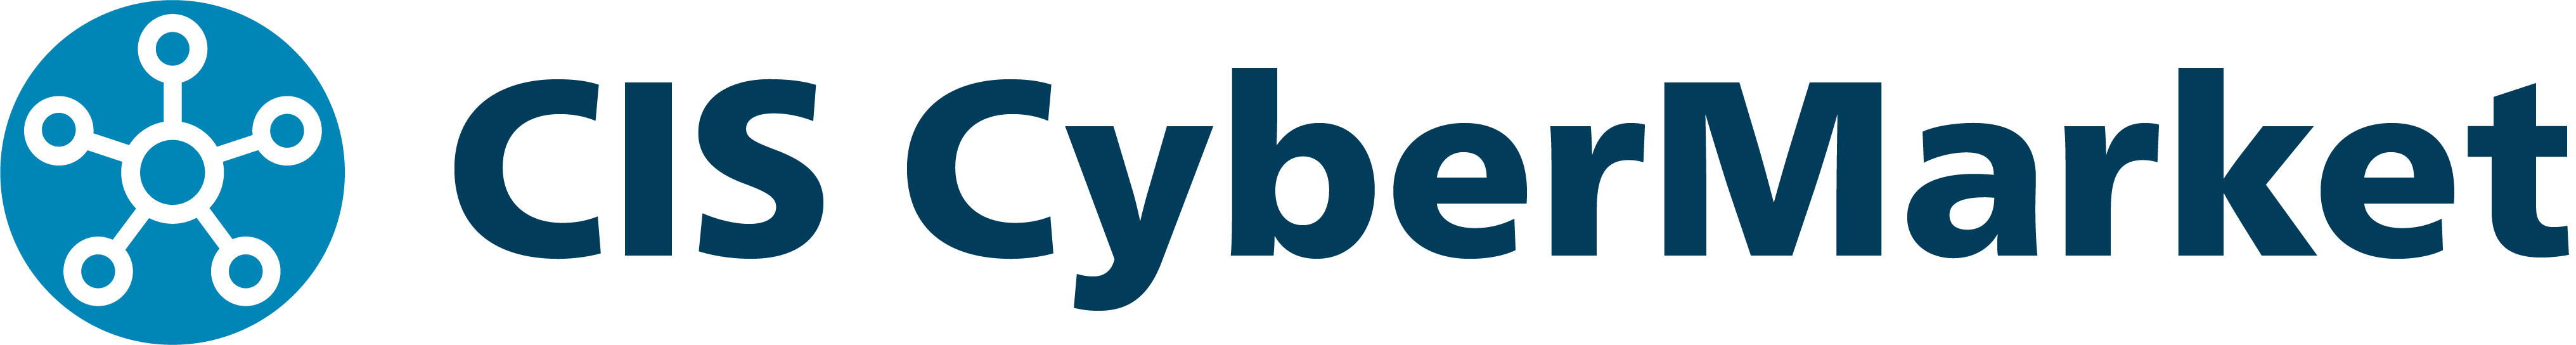 CIS CyberMarket logo